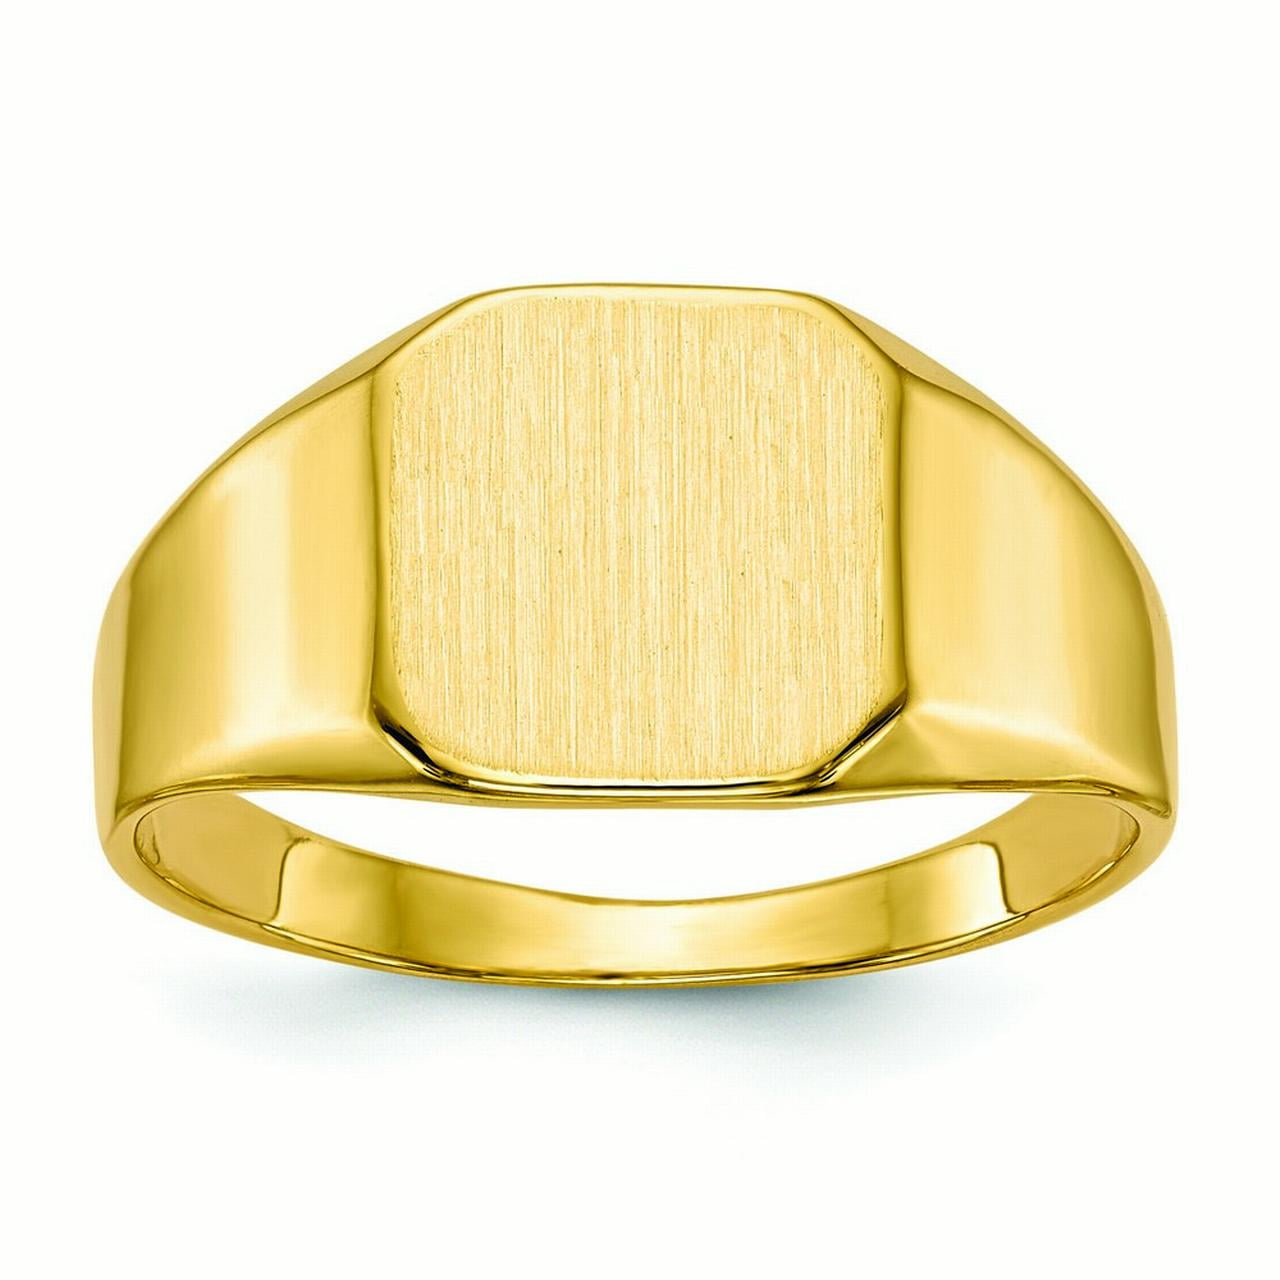 JewelryWeb - 14k Yellow Gold Mens Signet Ring - 6.7 Grams - Size 10 ...